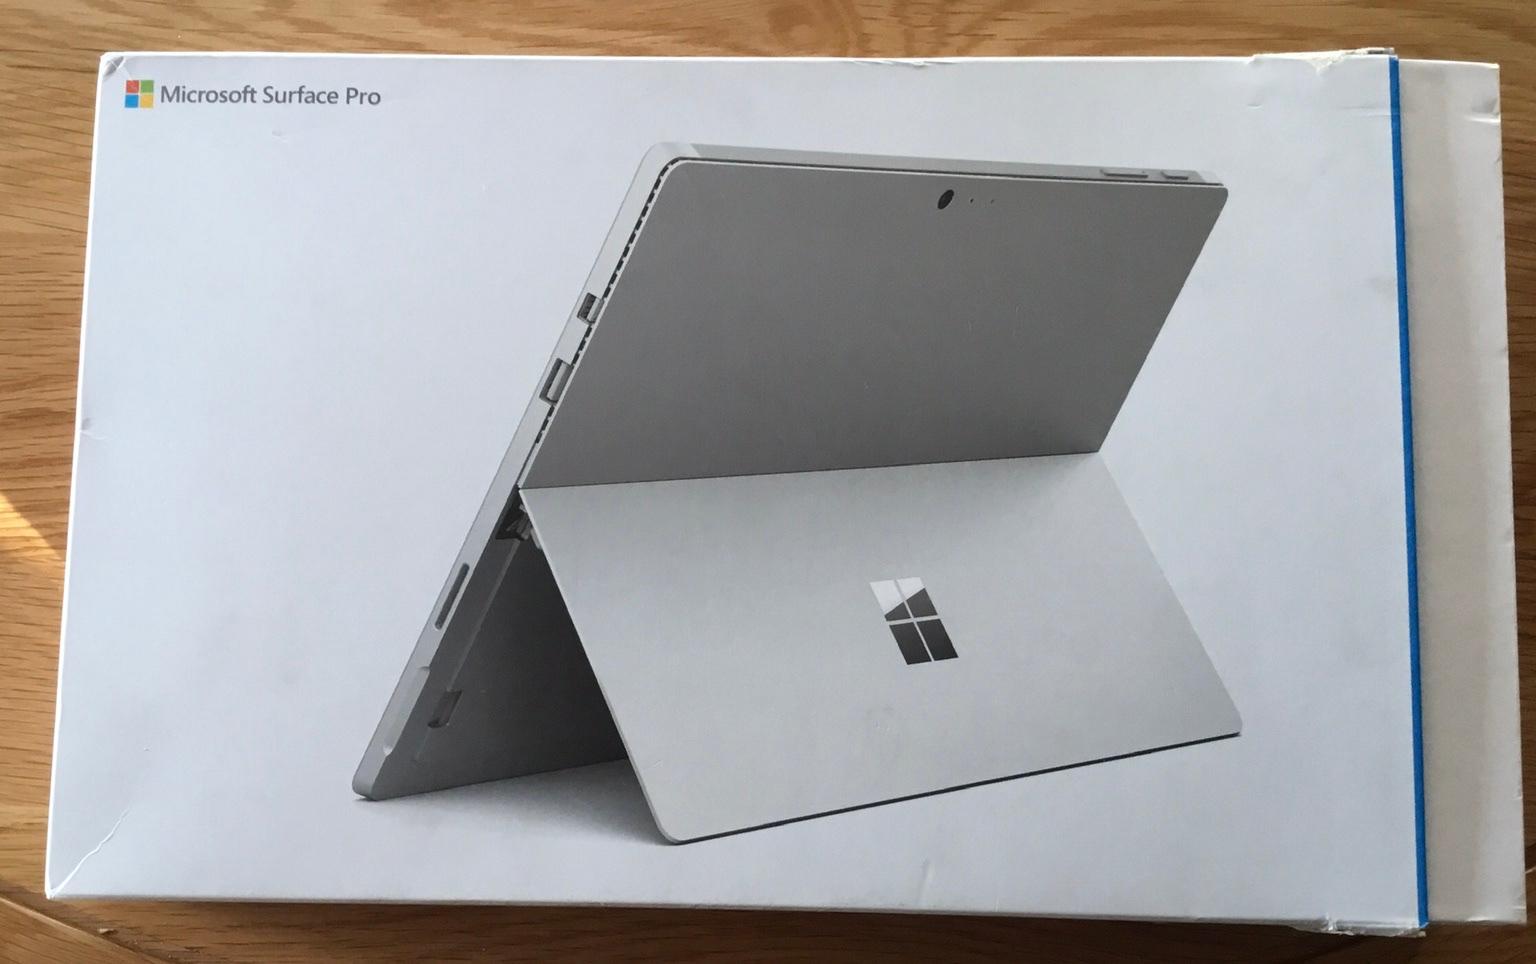 Microsoft Surface Pro 4 128gb + Moko Keyboard in LN6 Lincoln for £280